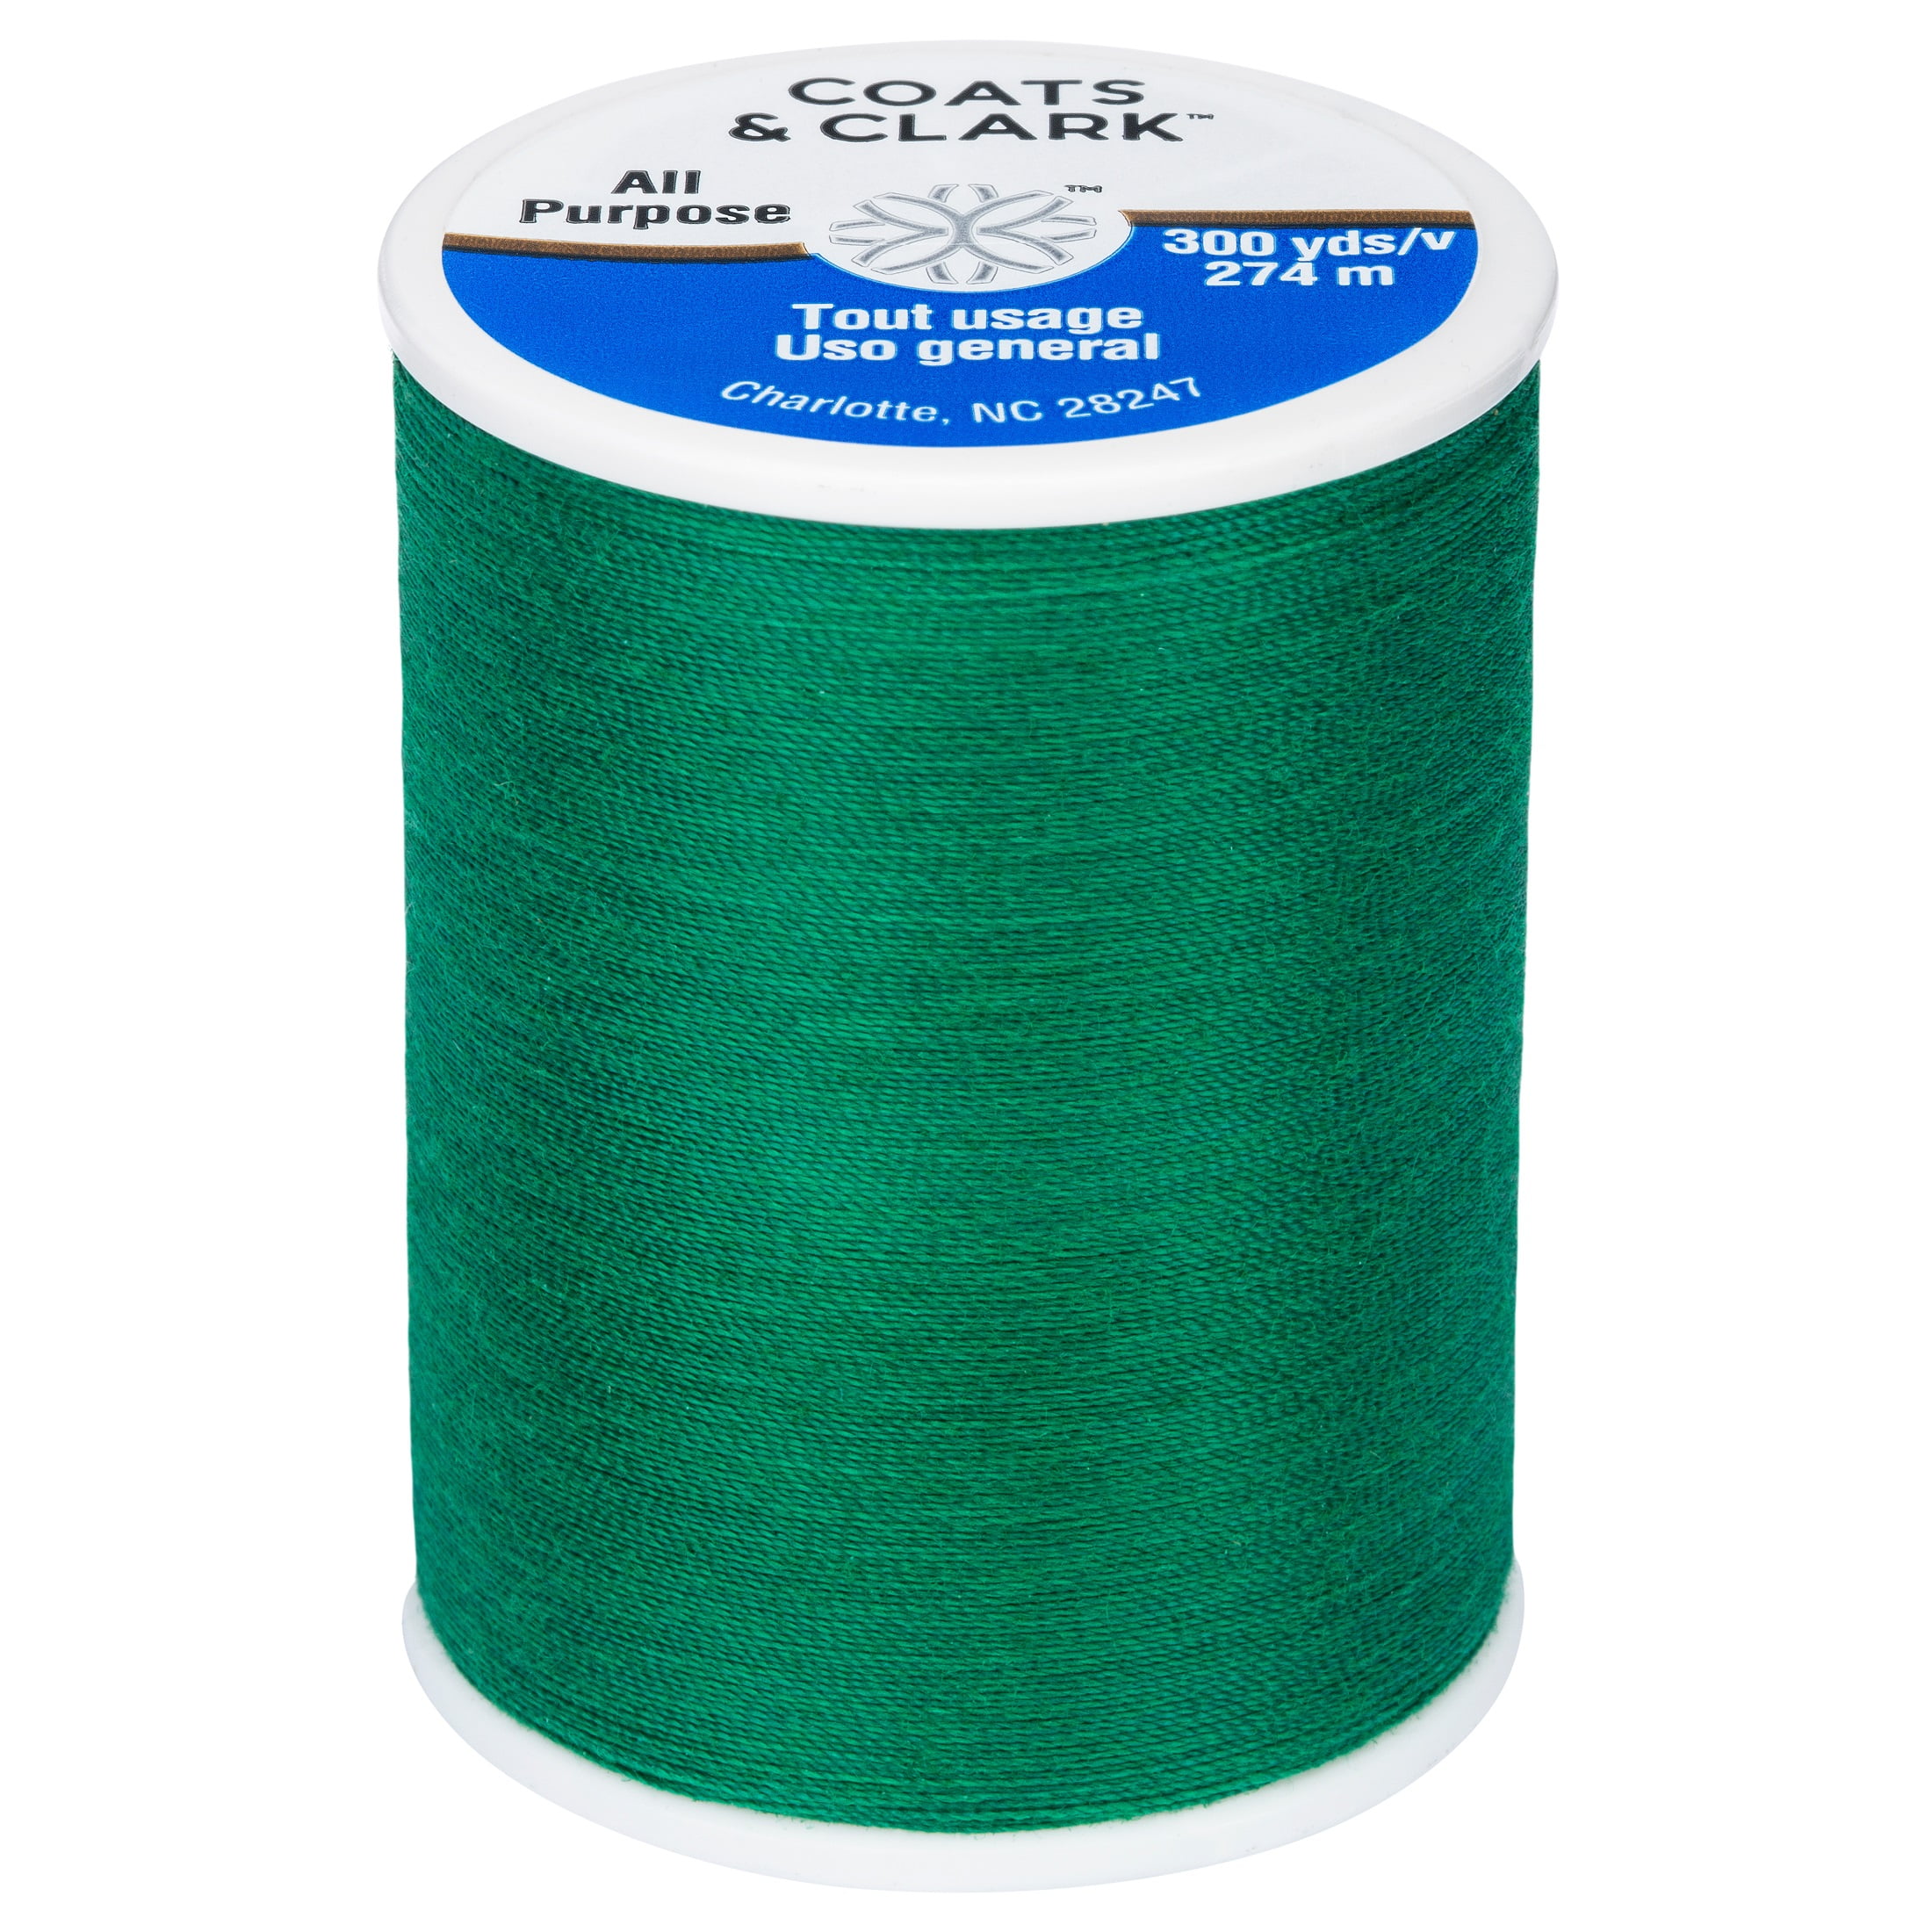 coats-clark-all-purpose-field-green-polyester-thread-300-yards-walmart-walmart